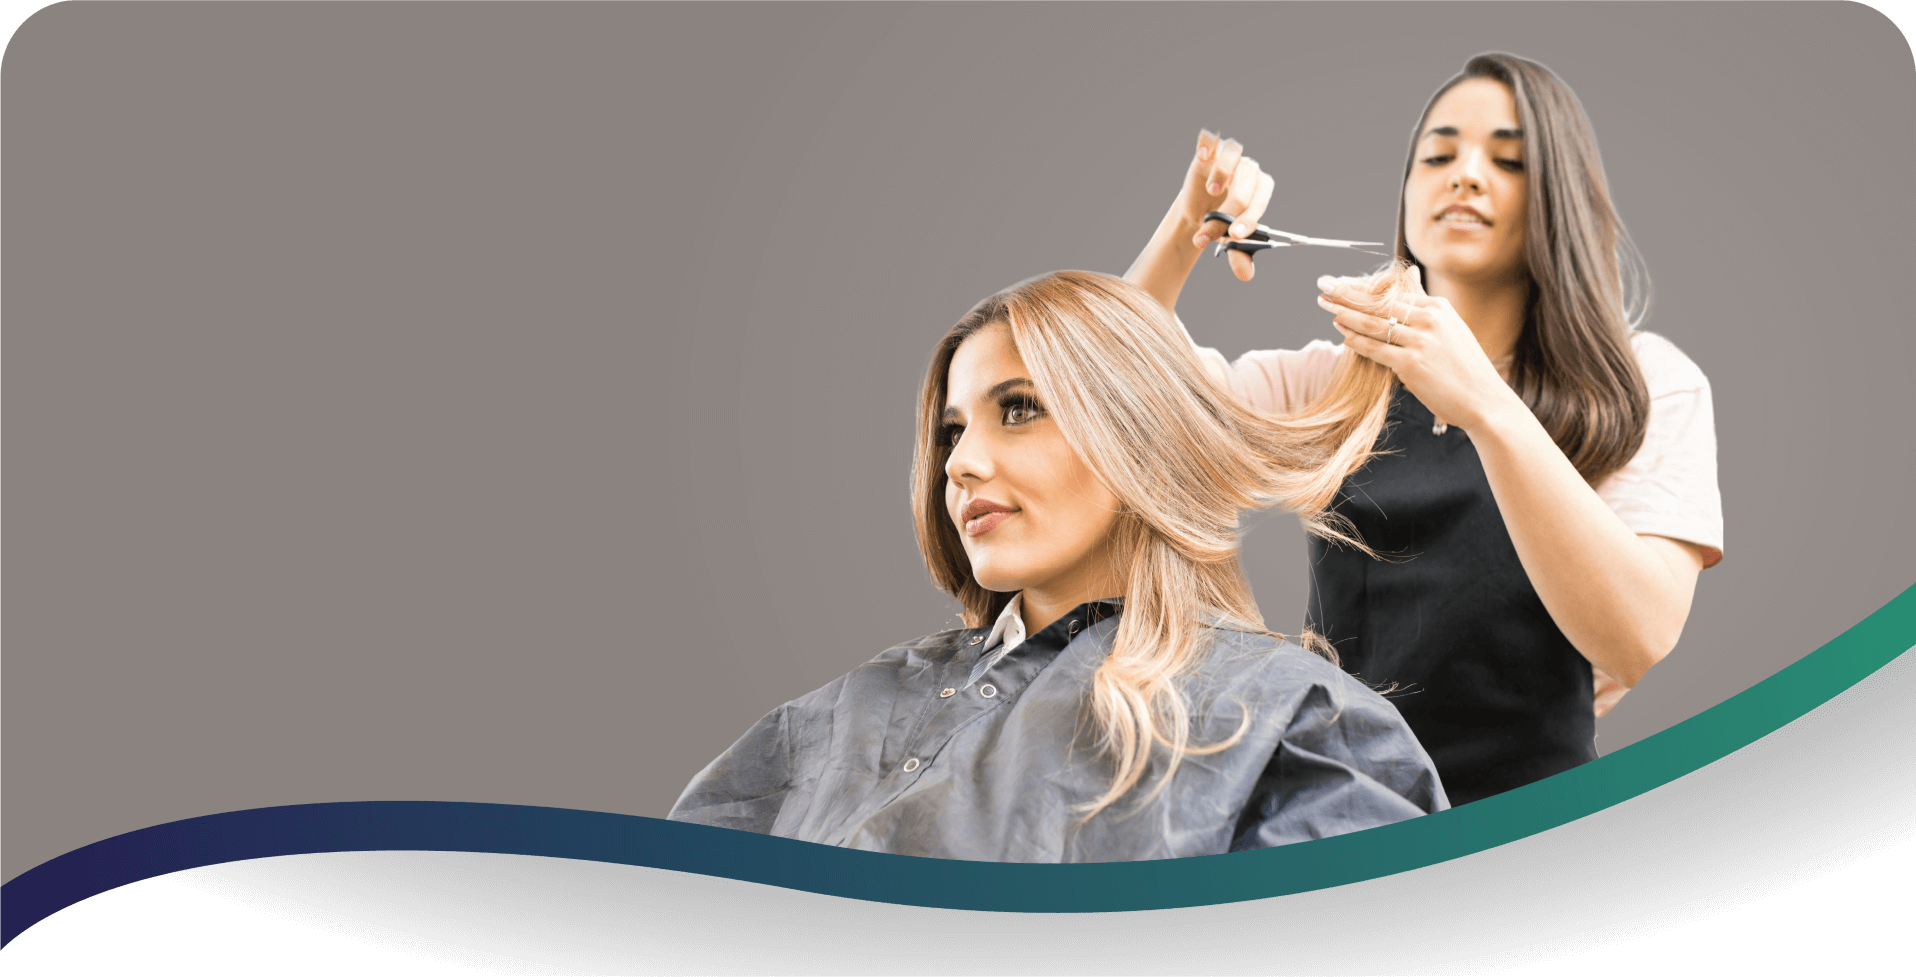 Hair salon services